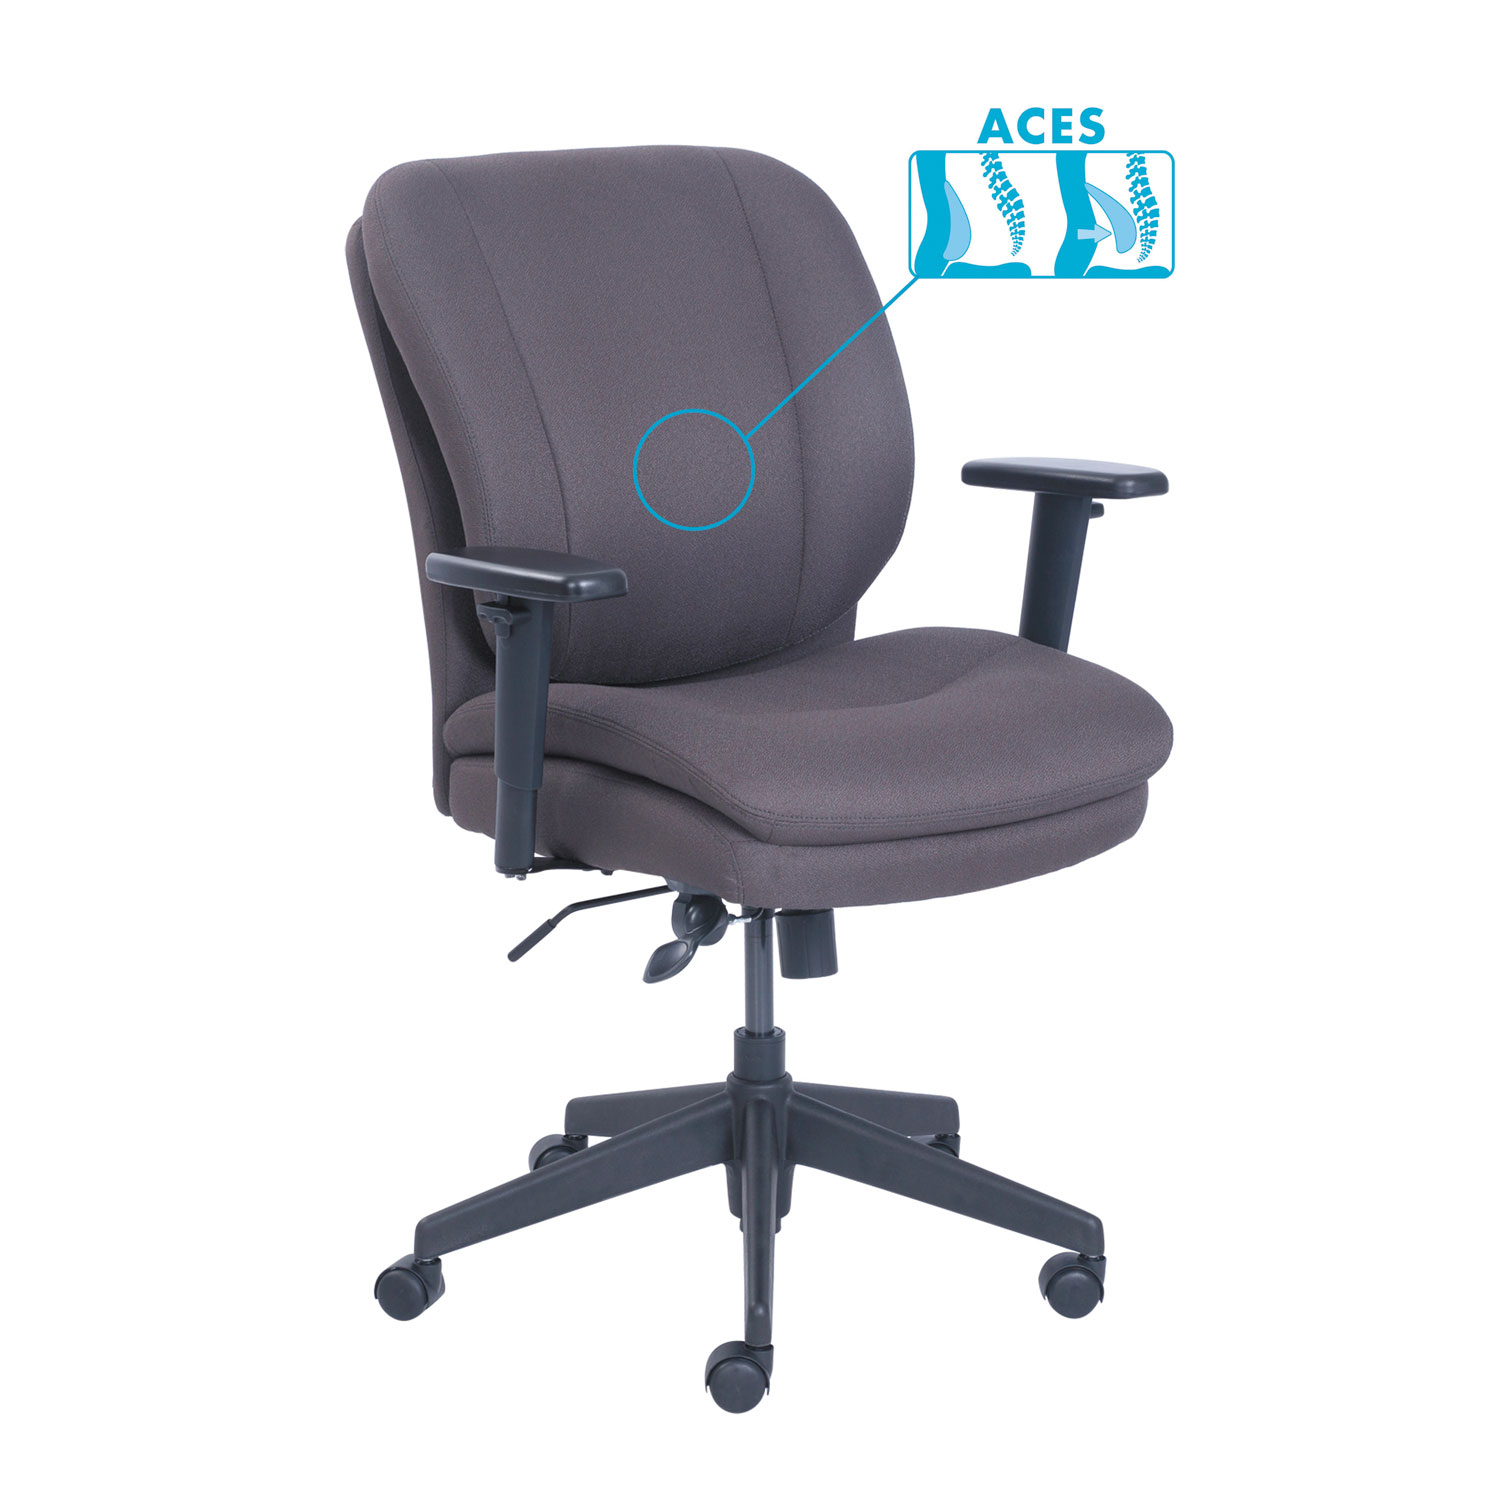  SertaPedic 48967B Cosset Ergonomic Task Chair, Supports up to 275 lbs., Gray Seat/Gray Back, Black Base (SRJ48967B) 